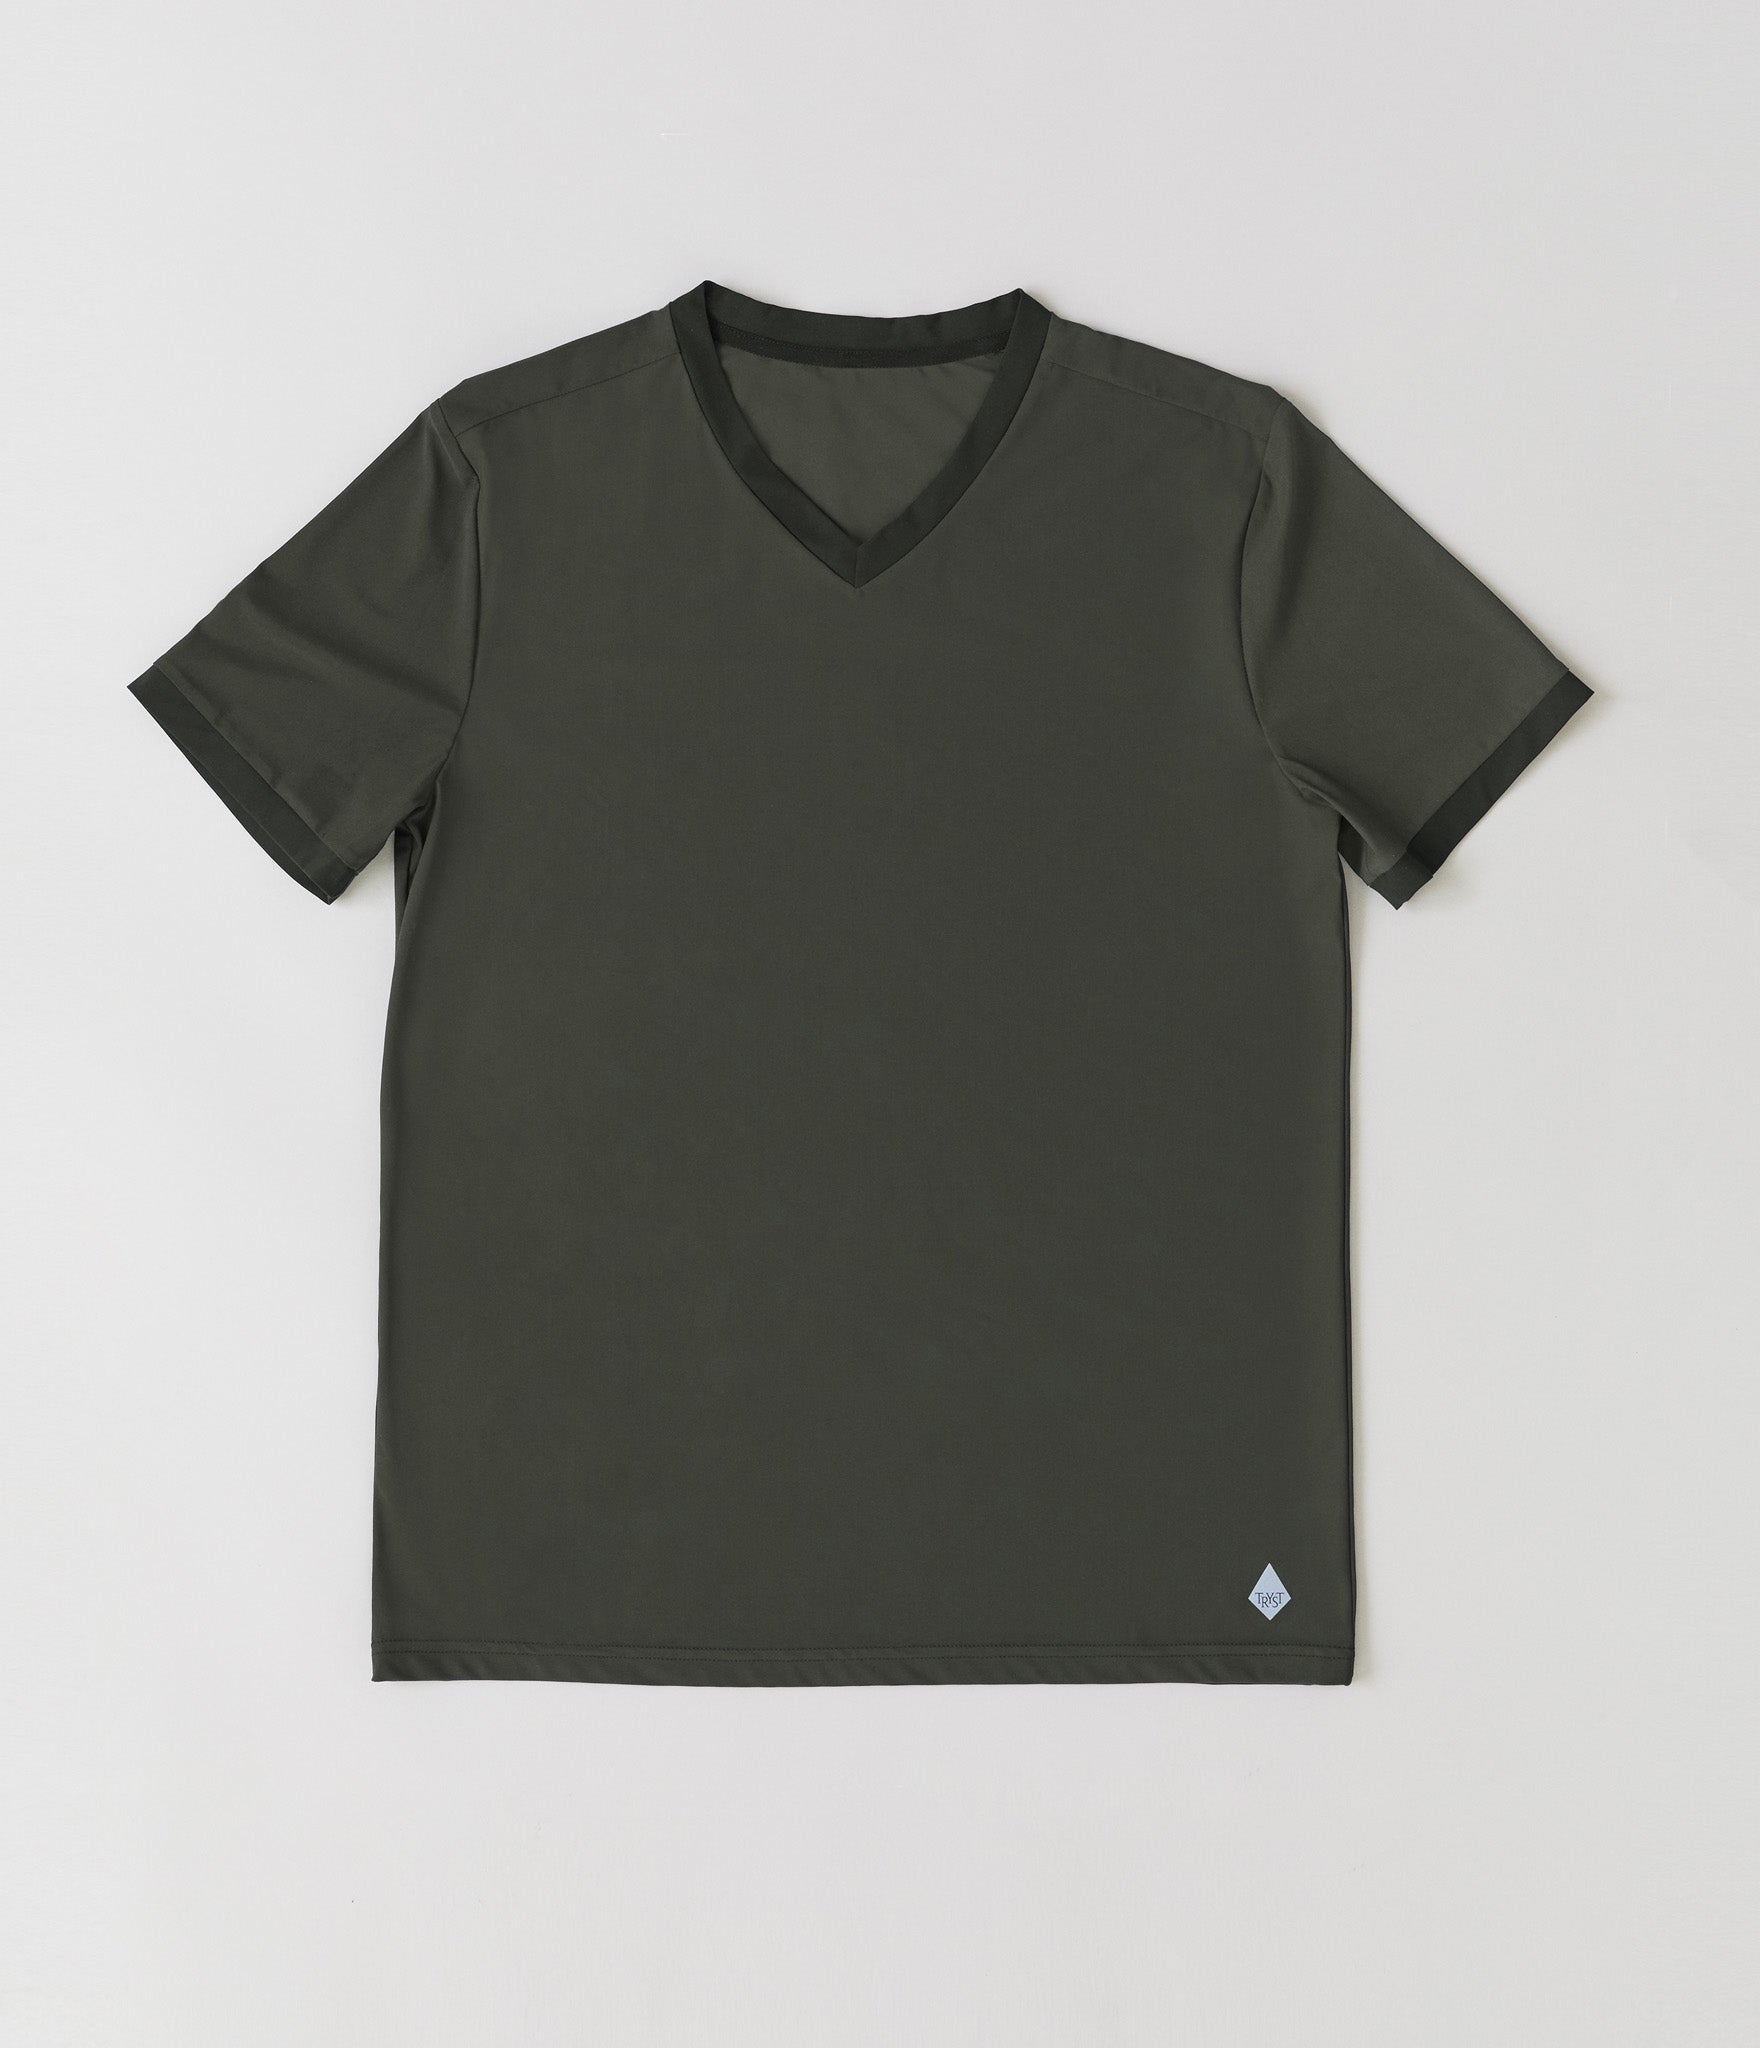 Monaco t-shirt</br>Khaki green